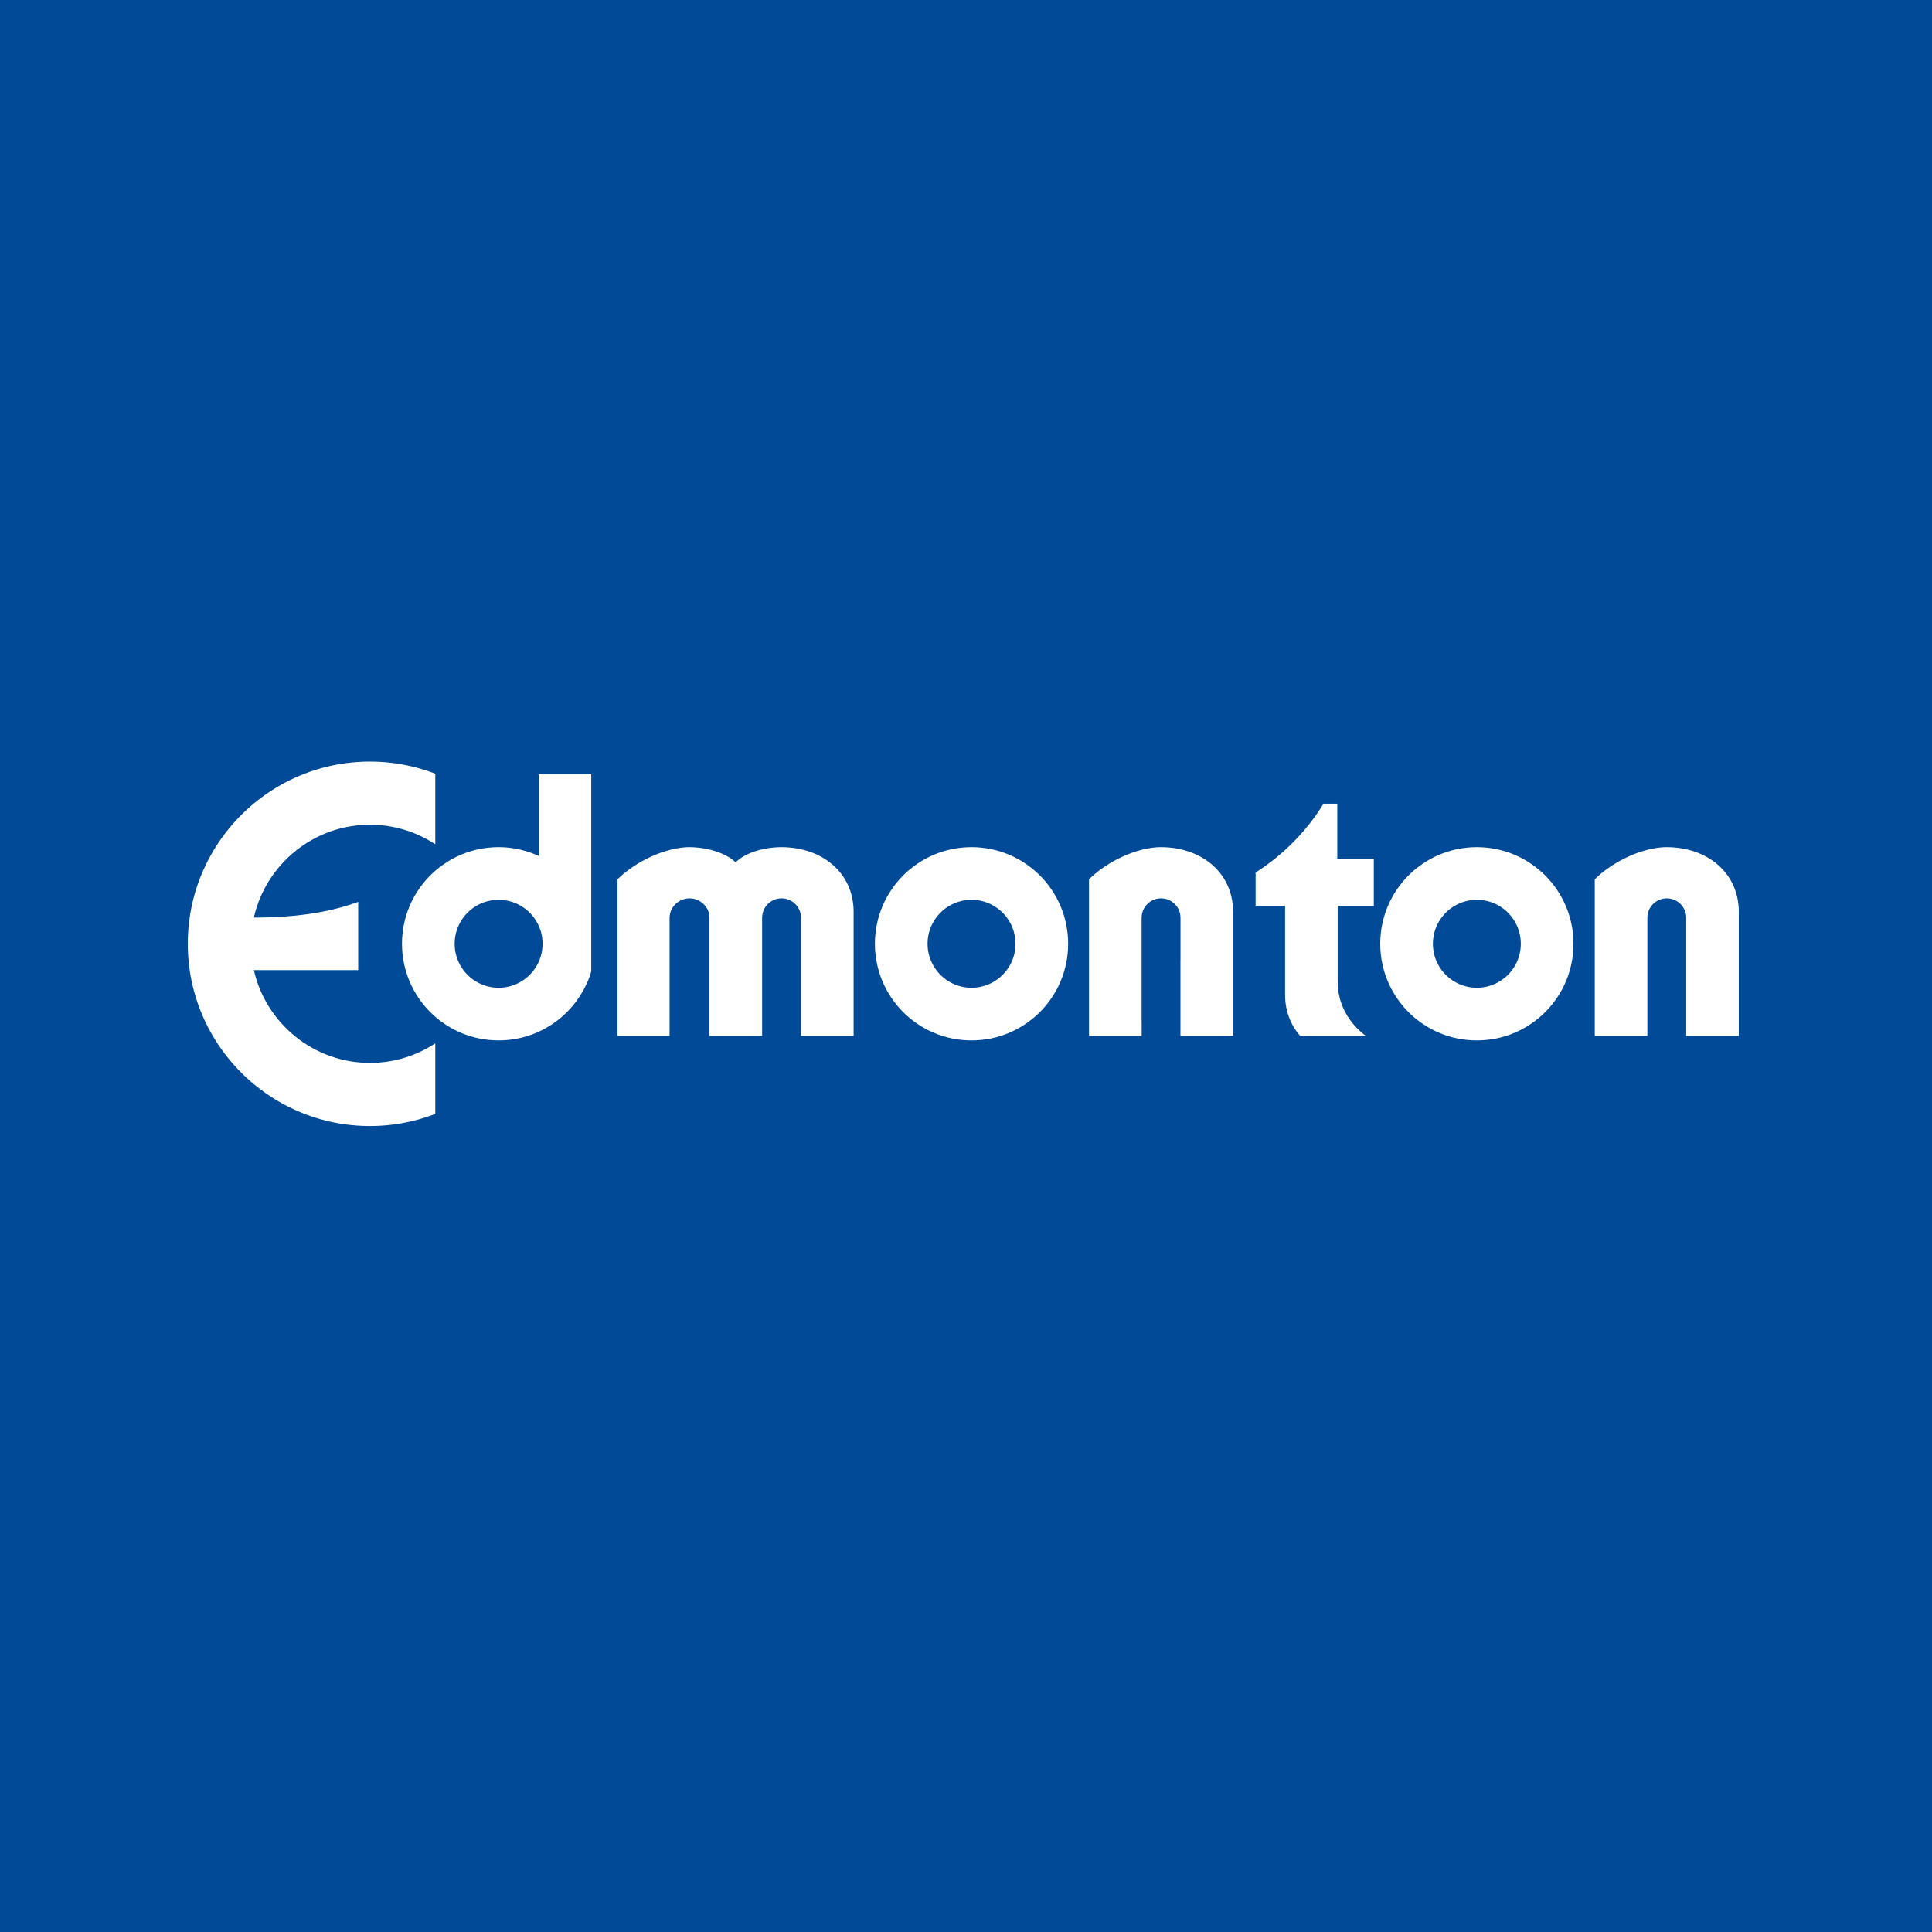 Logo Image for City of Edmonton